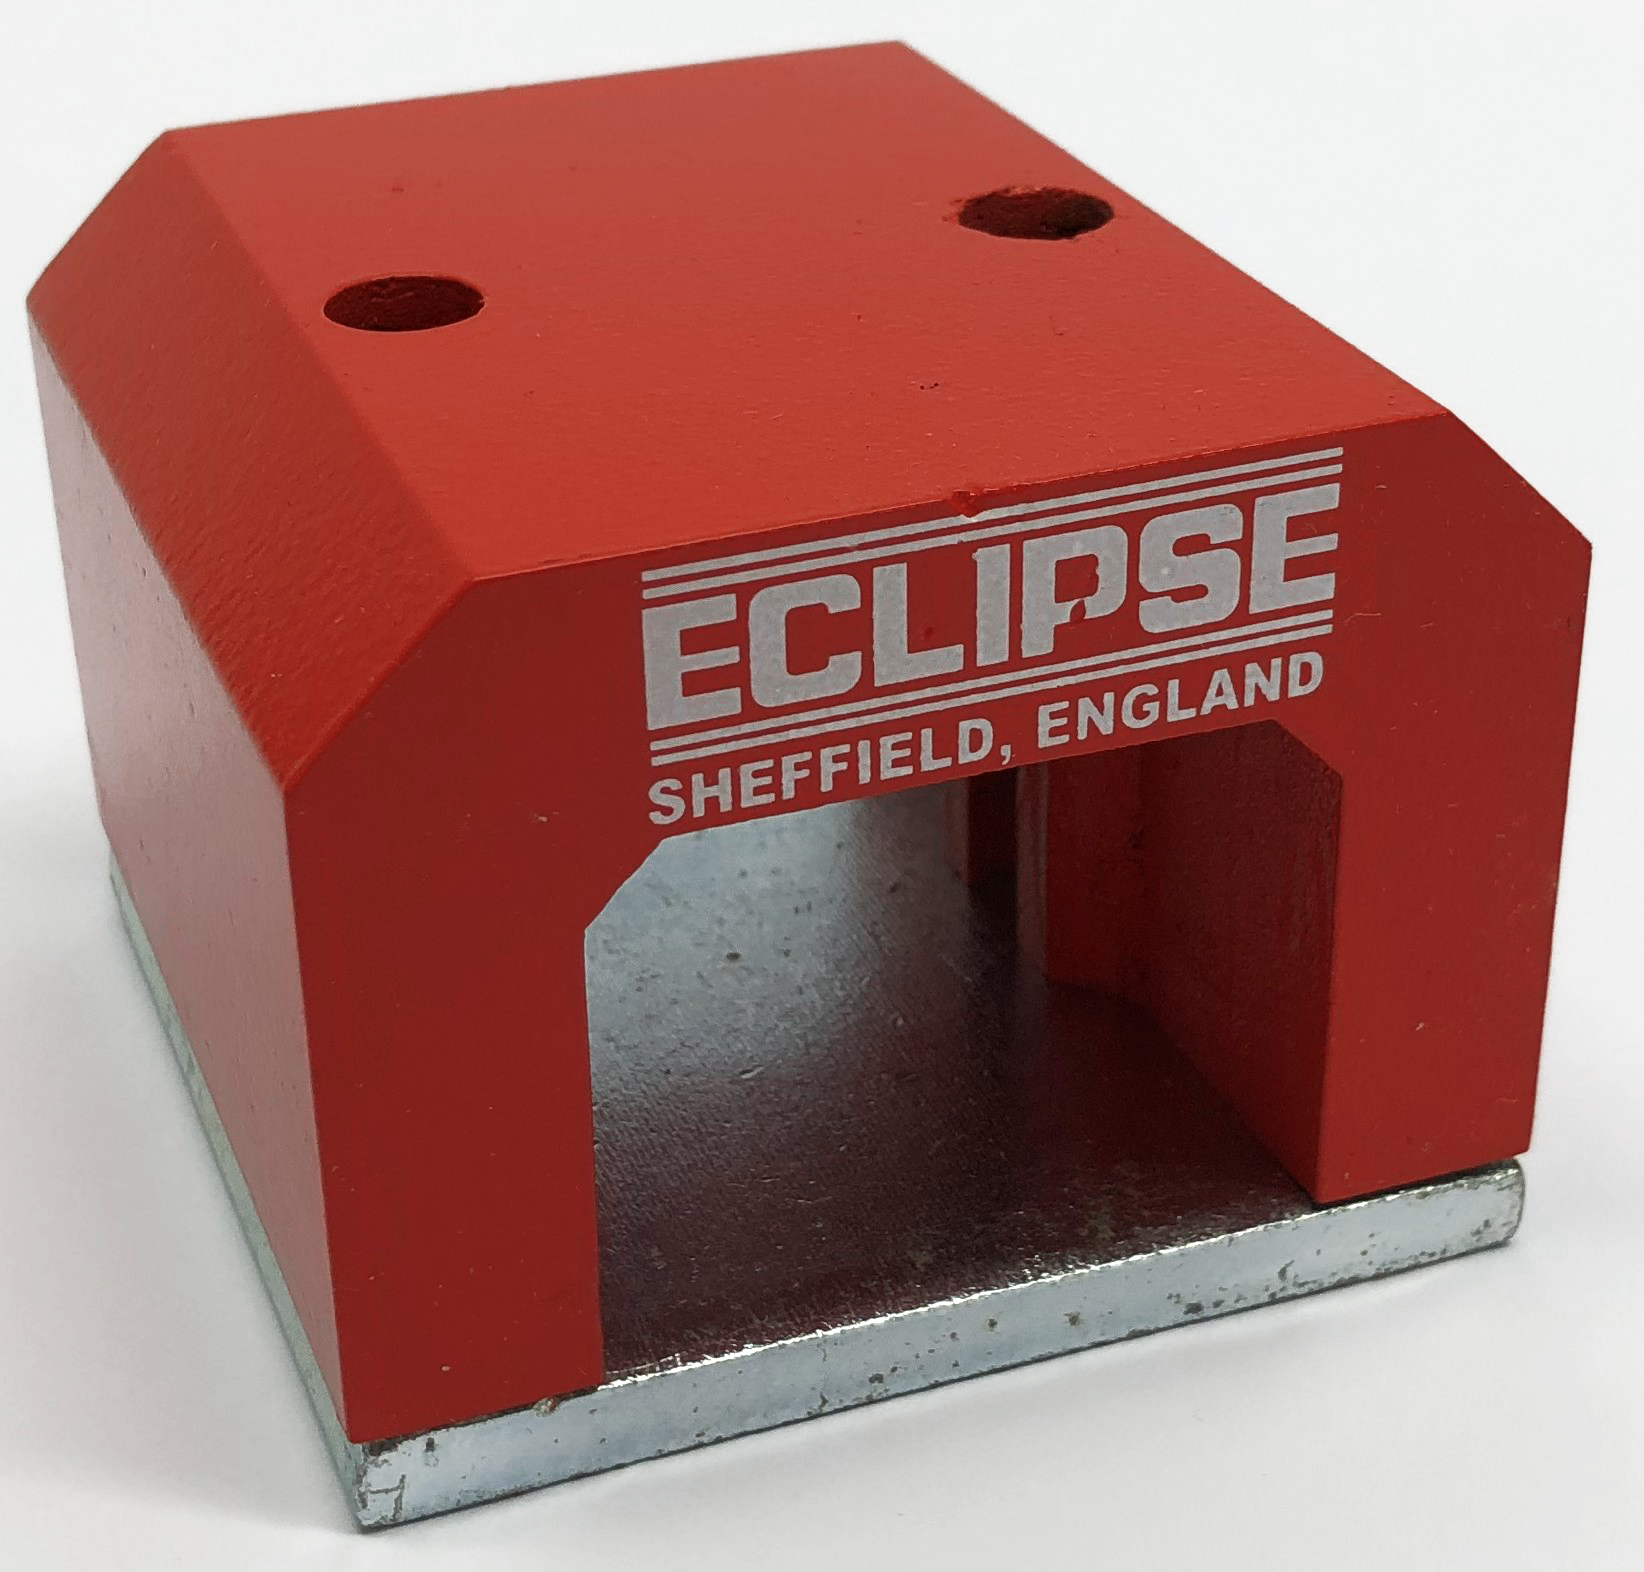 Eclipse U Shape Horseshoe Magnet 79.4mm Aluminium Alloy, 47kg Pull